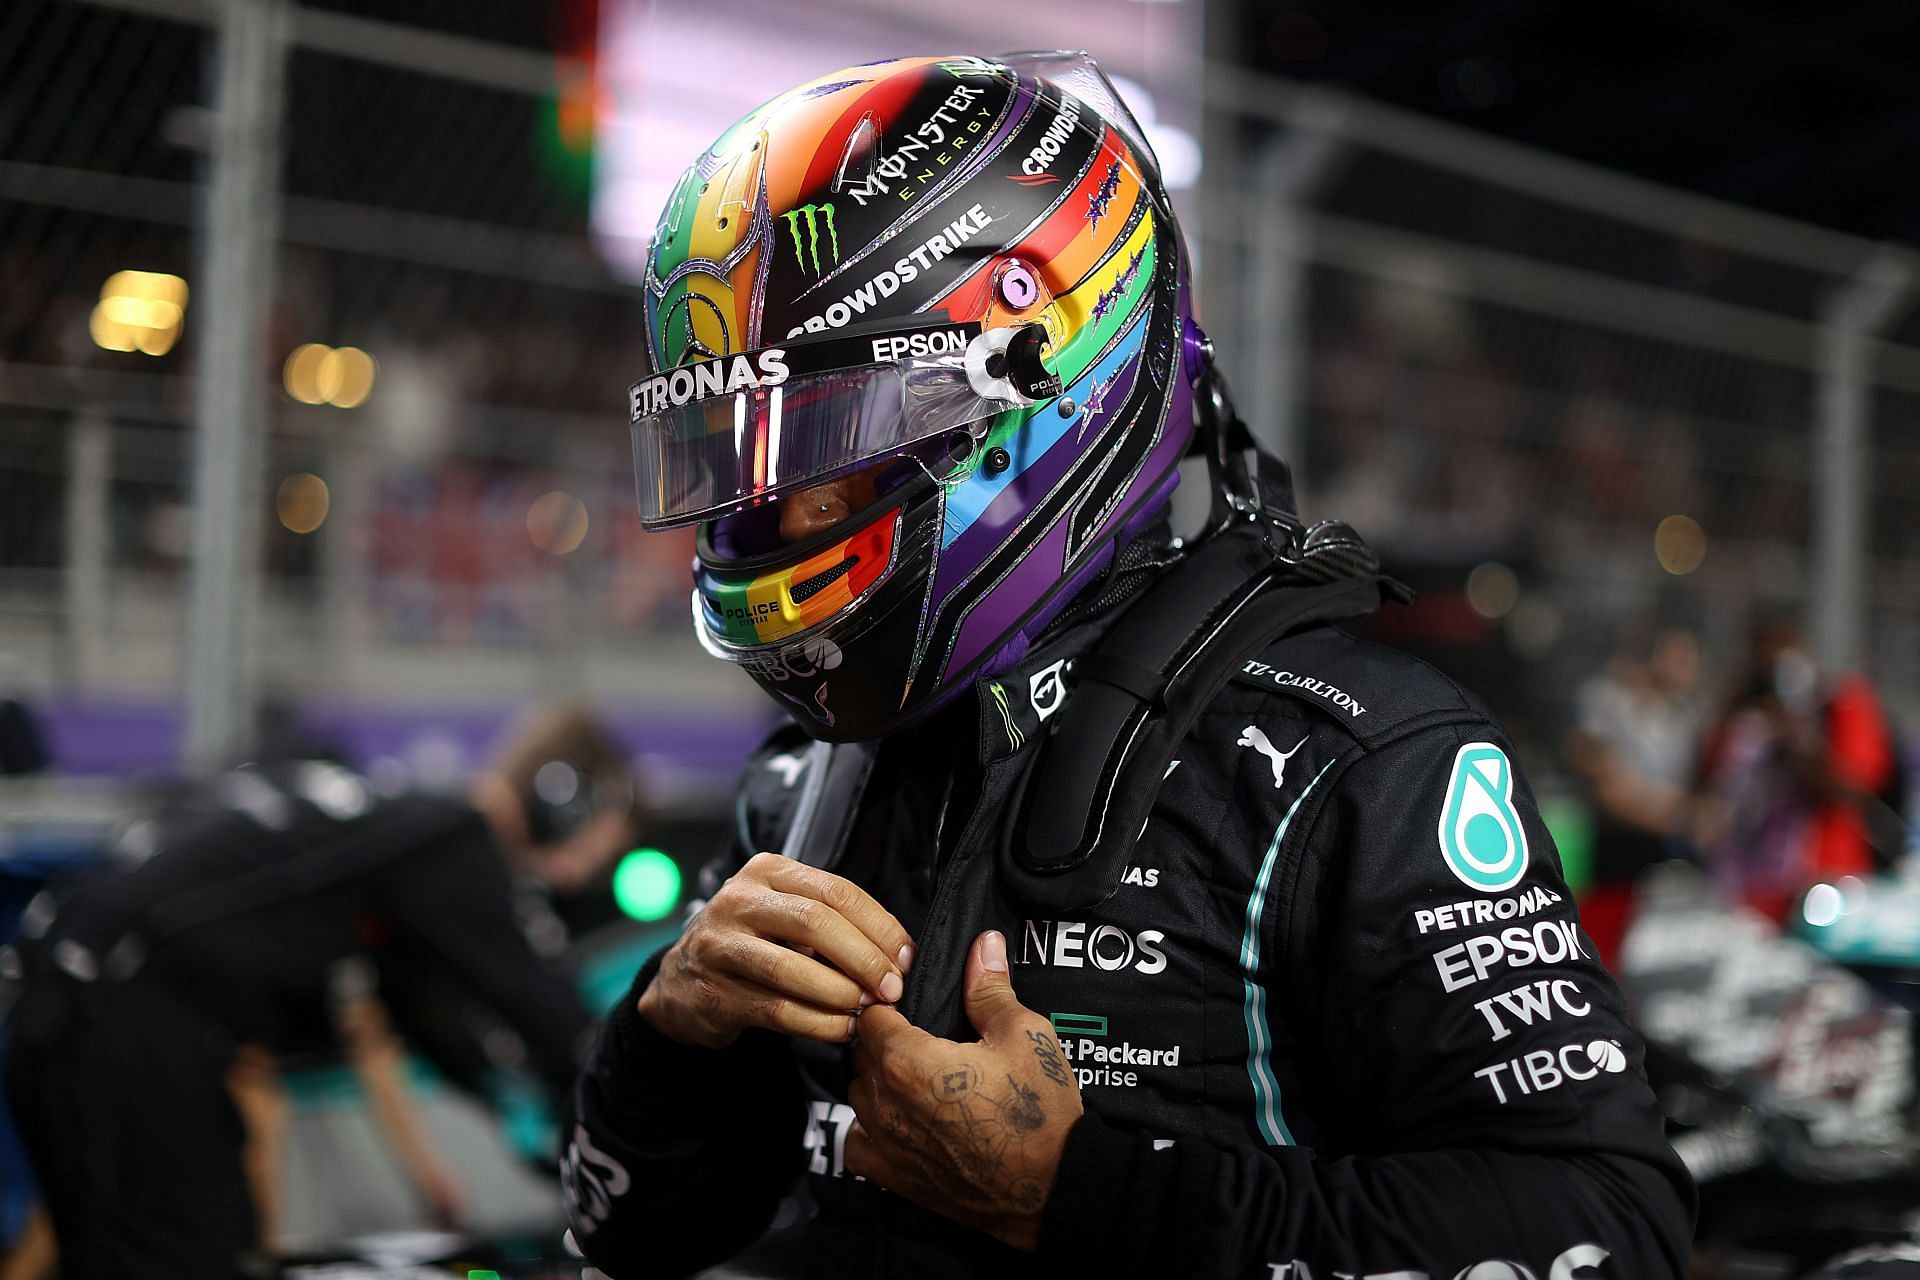 F1 Grand Prix of Saudi Arabia - Lewis Hamilton equalizes playing field.